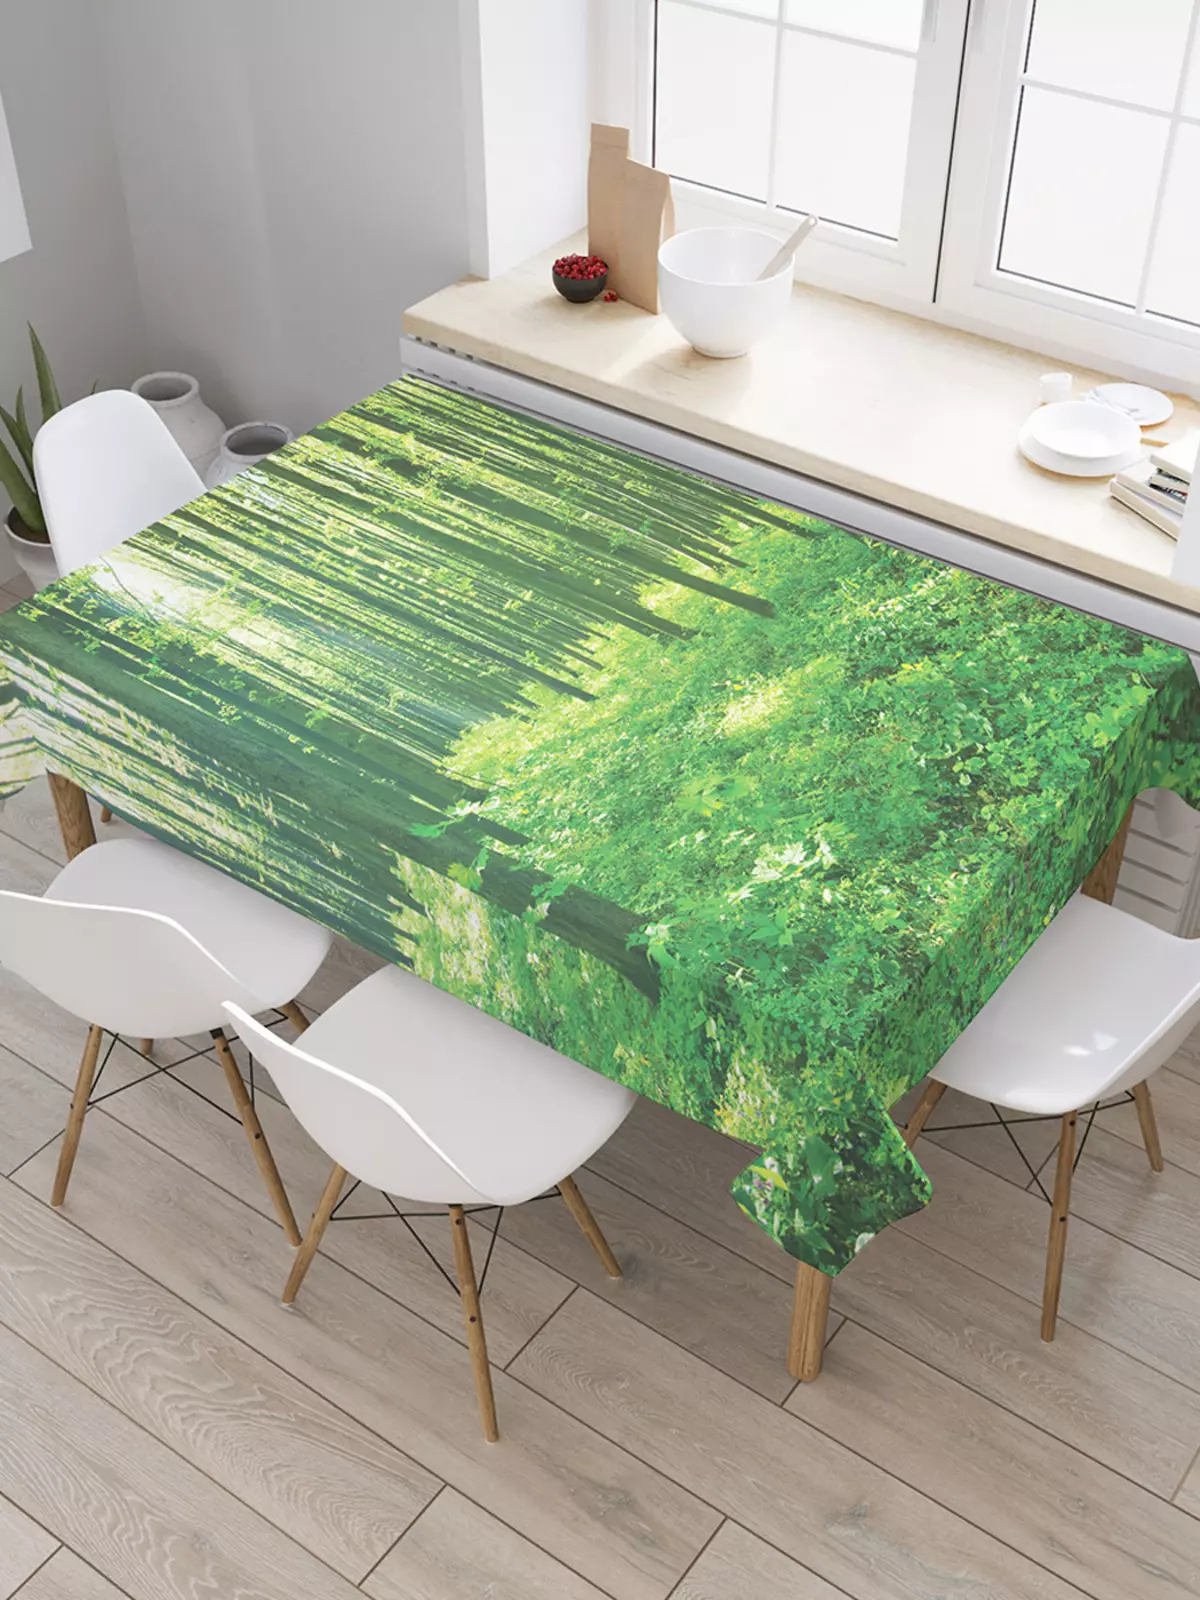 Green Tableclots: စားပွဲပေါ်ရှိအစိမ်းရောင် Monophonic 0 ယ်ယူမှုများနှင့်မီးခိုးရောင်အစိမ်းရောင်, အတွင်းပိုင်းတွင်ပိတ်ချောနှင့်ယာယီ, ဘဲဥပုံနှင့်ပတ်ပတ်လည်စားပွဲများ 21601_8